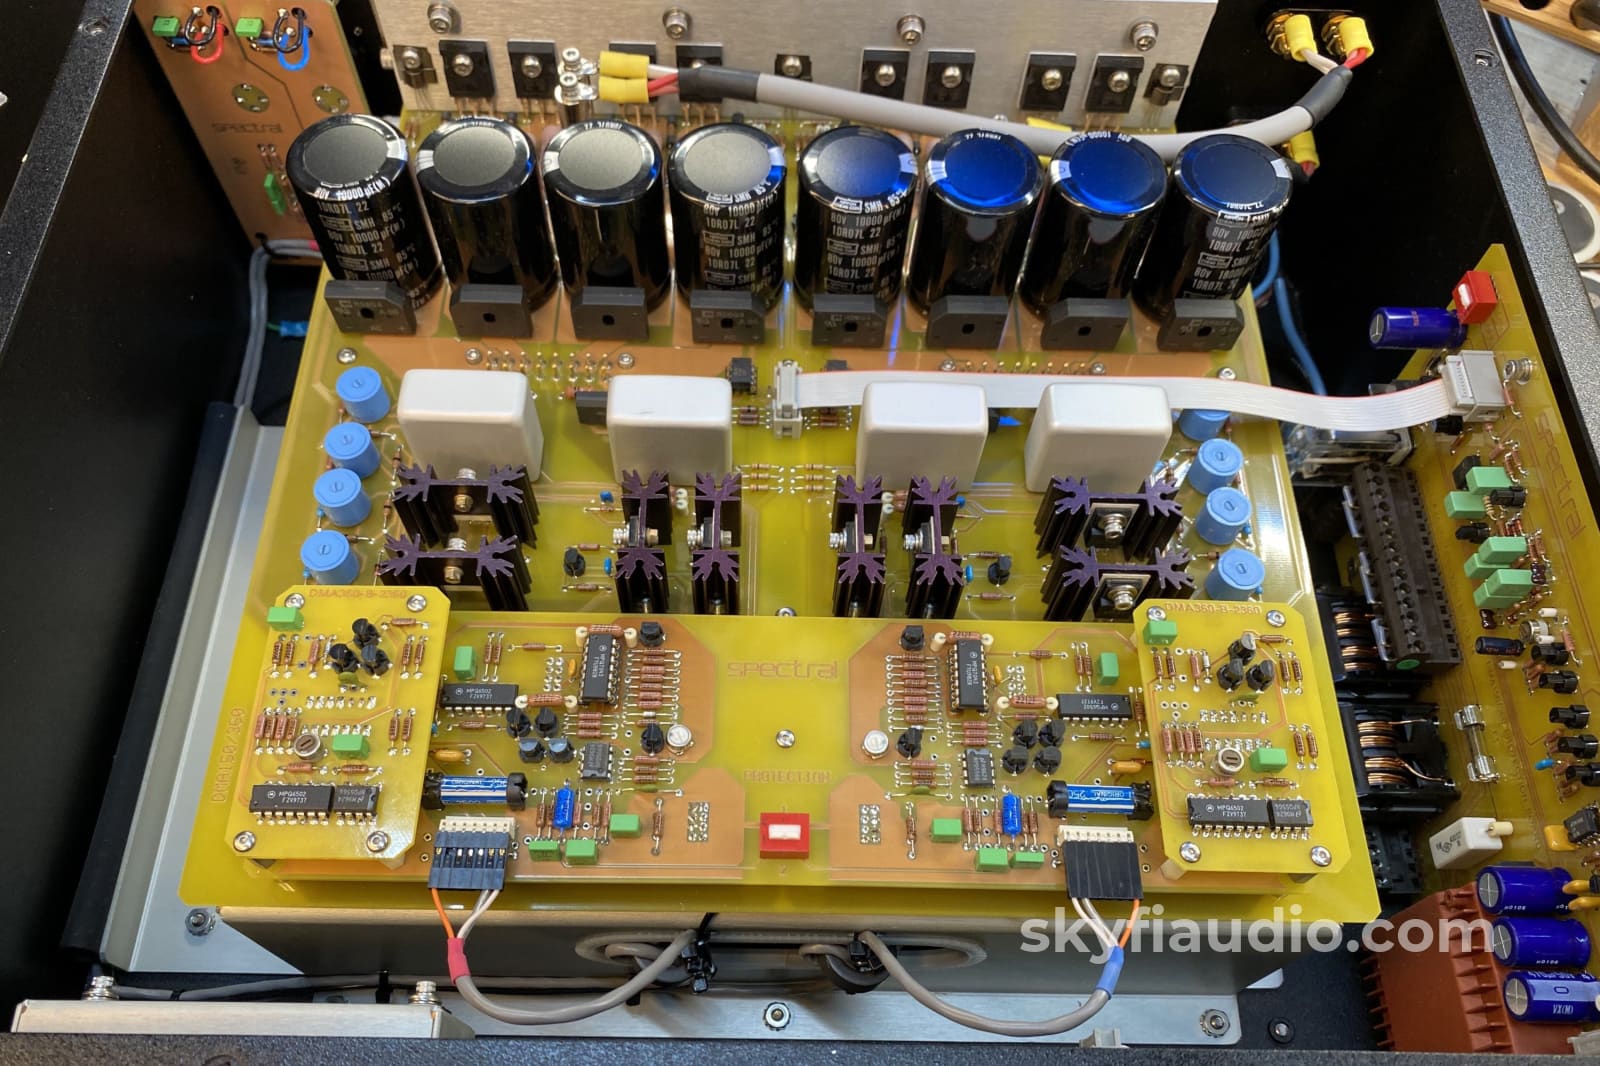 Spectral Dma-150S Studio Universal Megahertz Power Amplifier - Super Rare